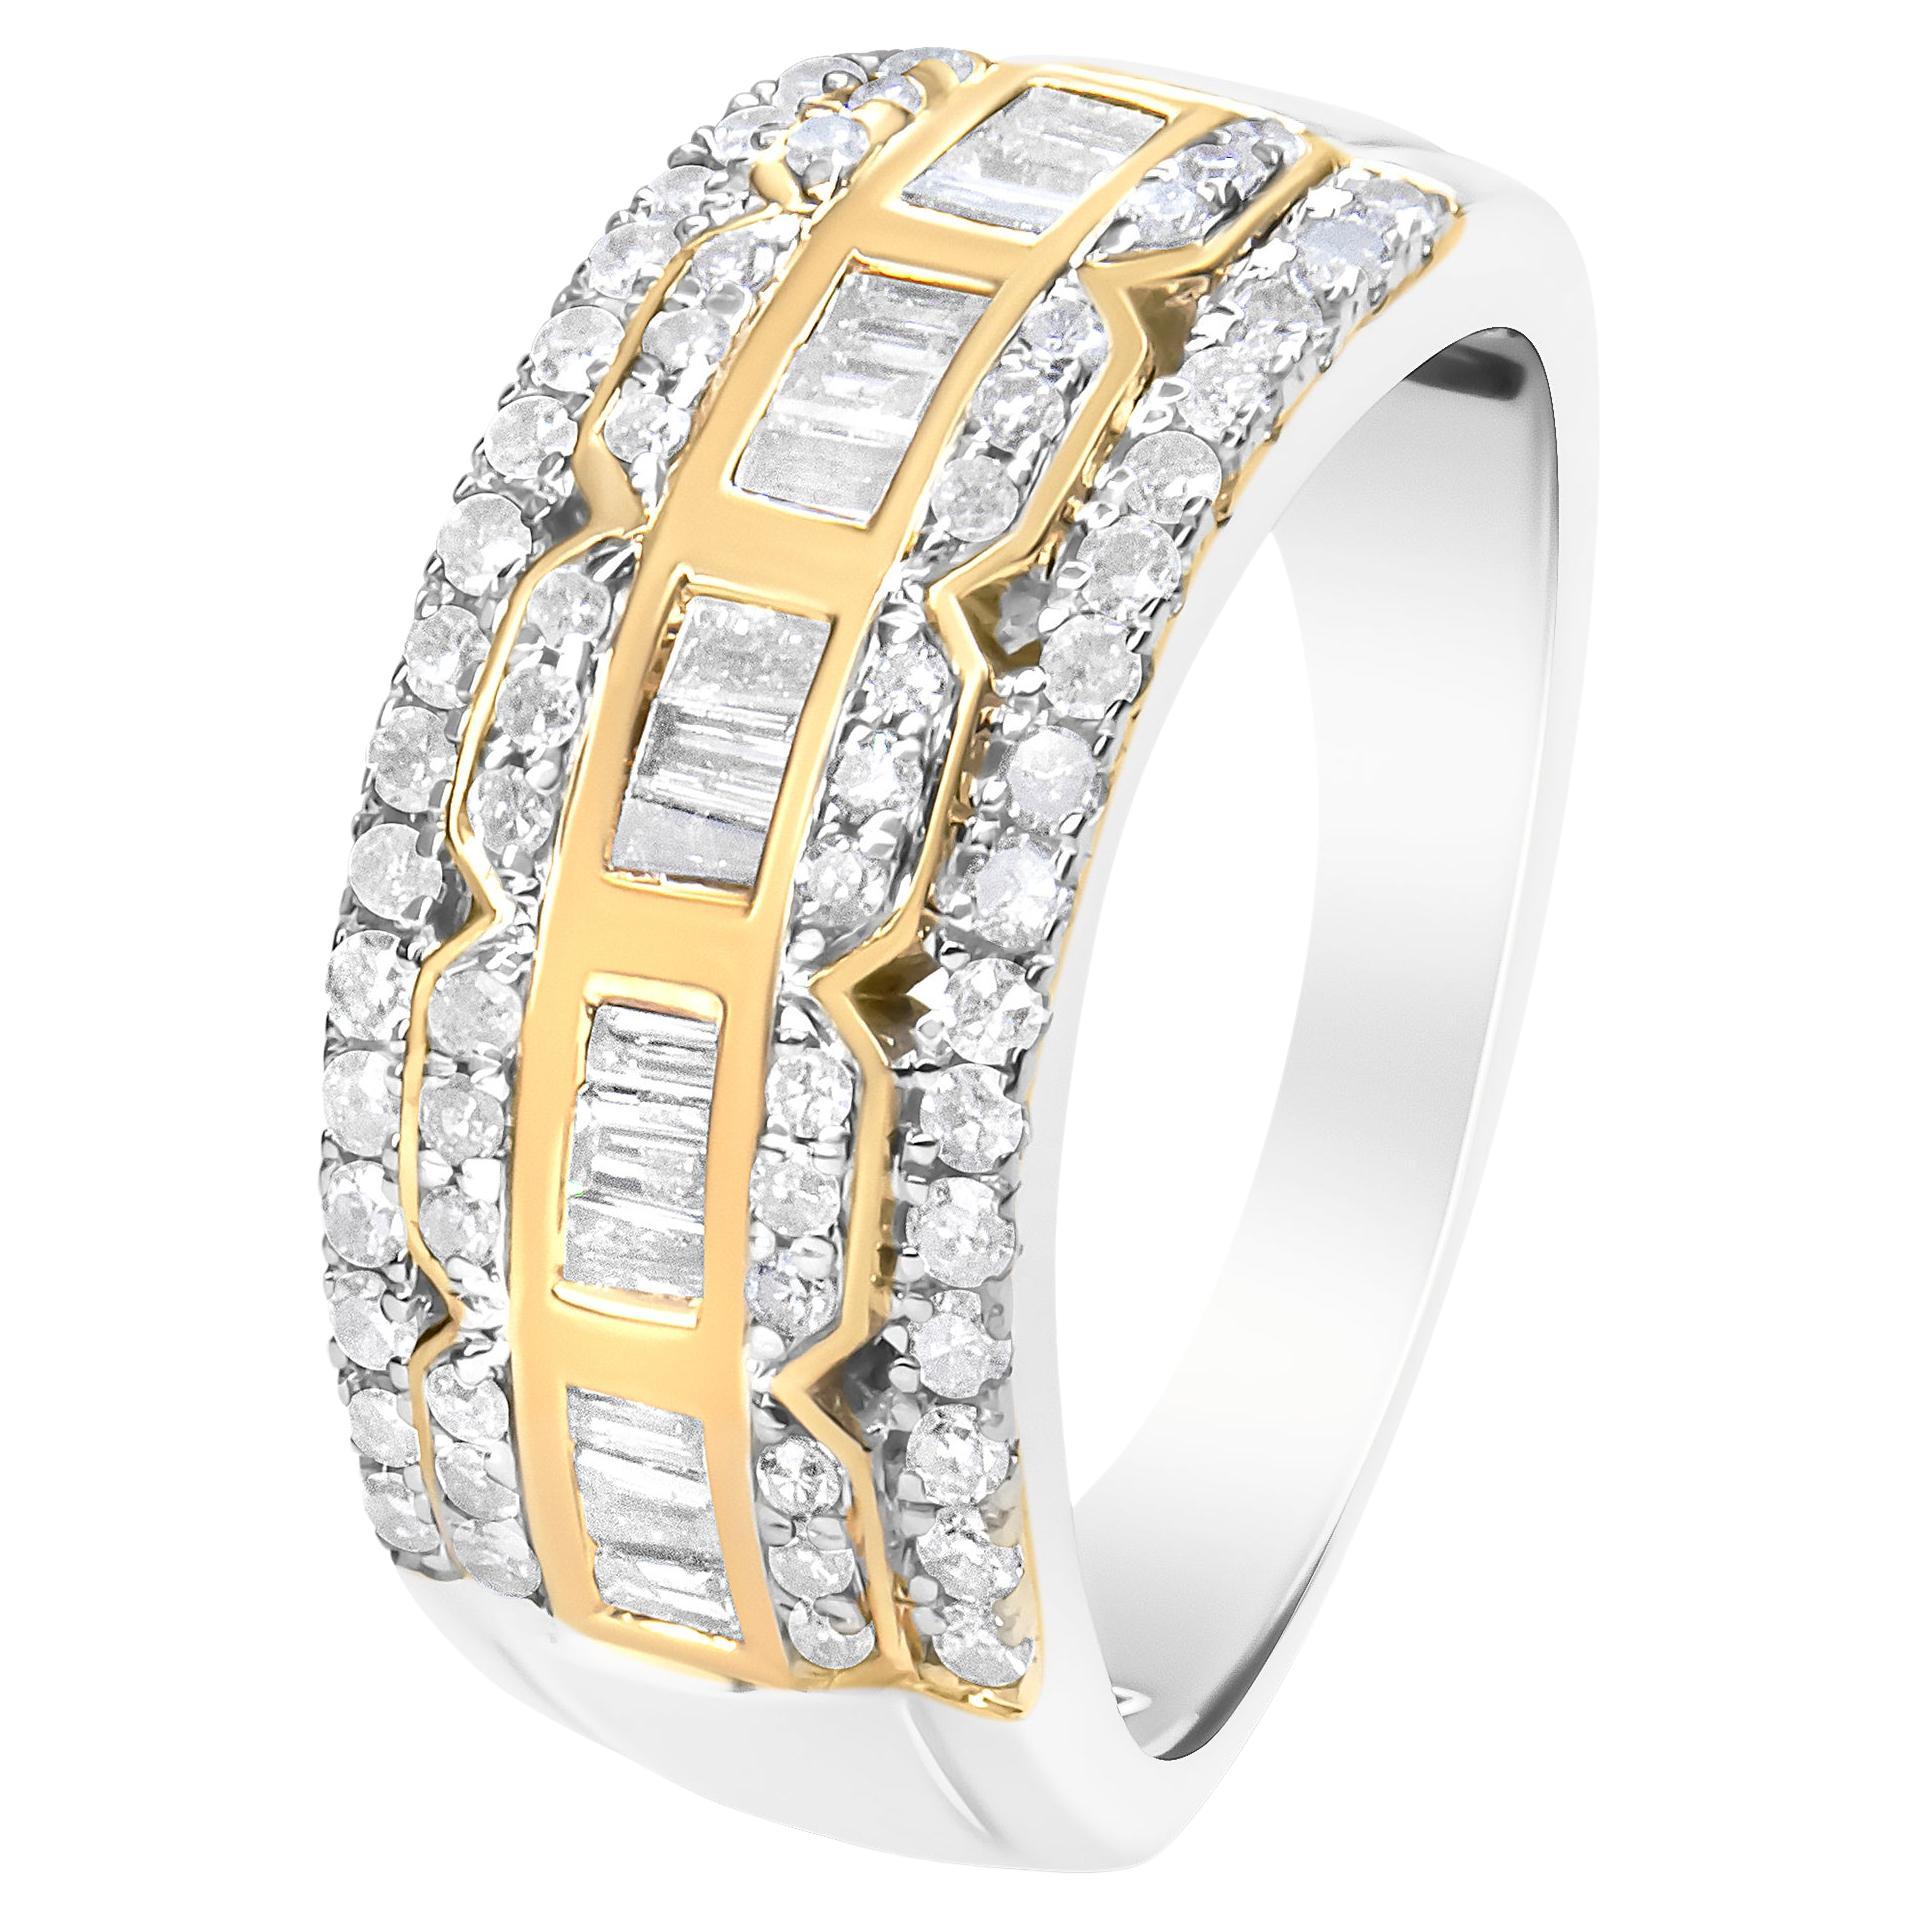 10K White and Yellow Gold 1.0 Carat Diamond Art Deco Multi-Row Ring Band